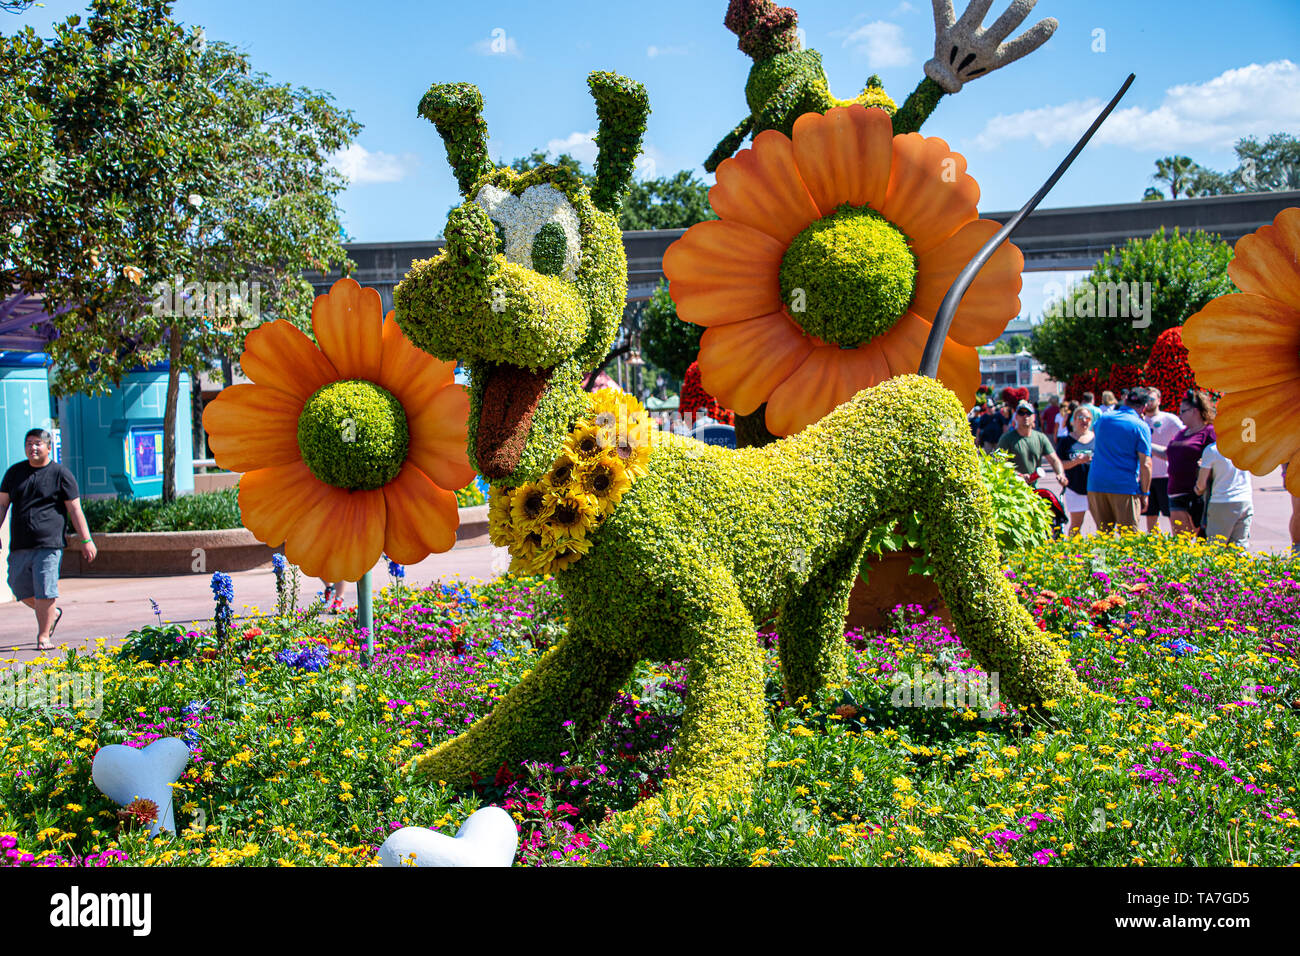 ORLANDO, USA. 29TH APRIL 2019: Pluto topiary display figure on display at Disney World Stock Photo